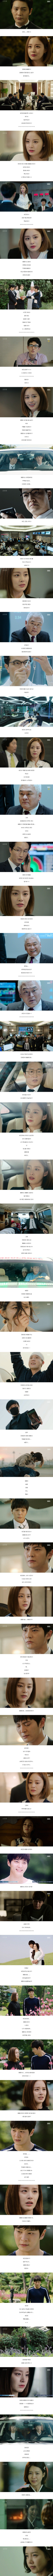 episode 16 captures for the Korean drama 'Yong Pal'